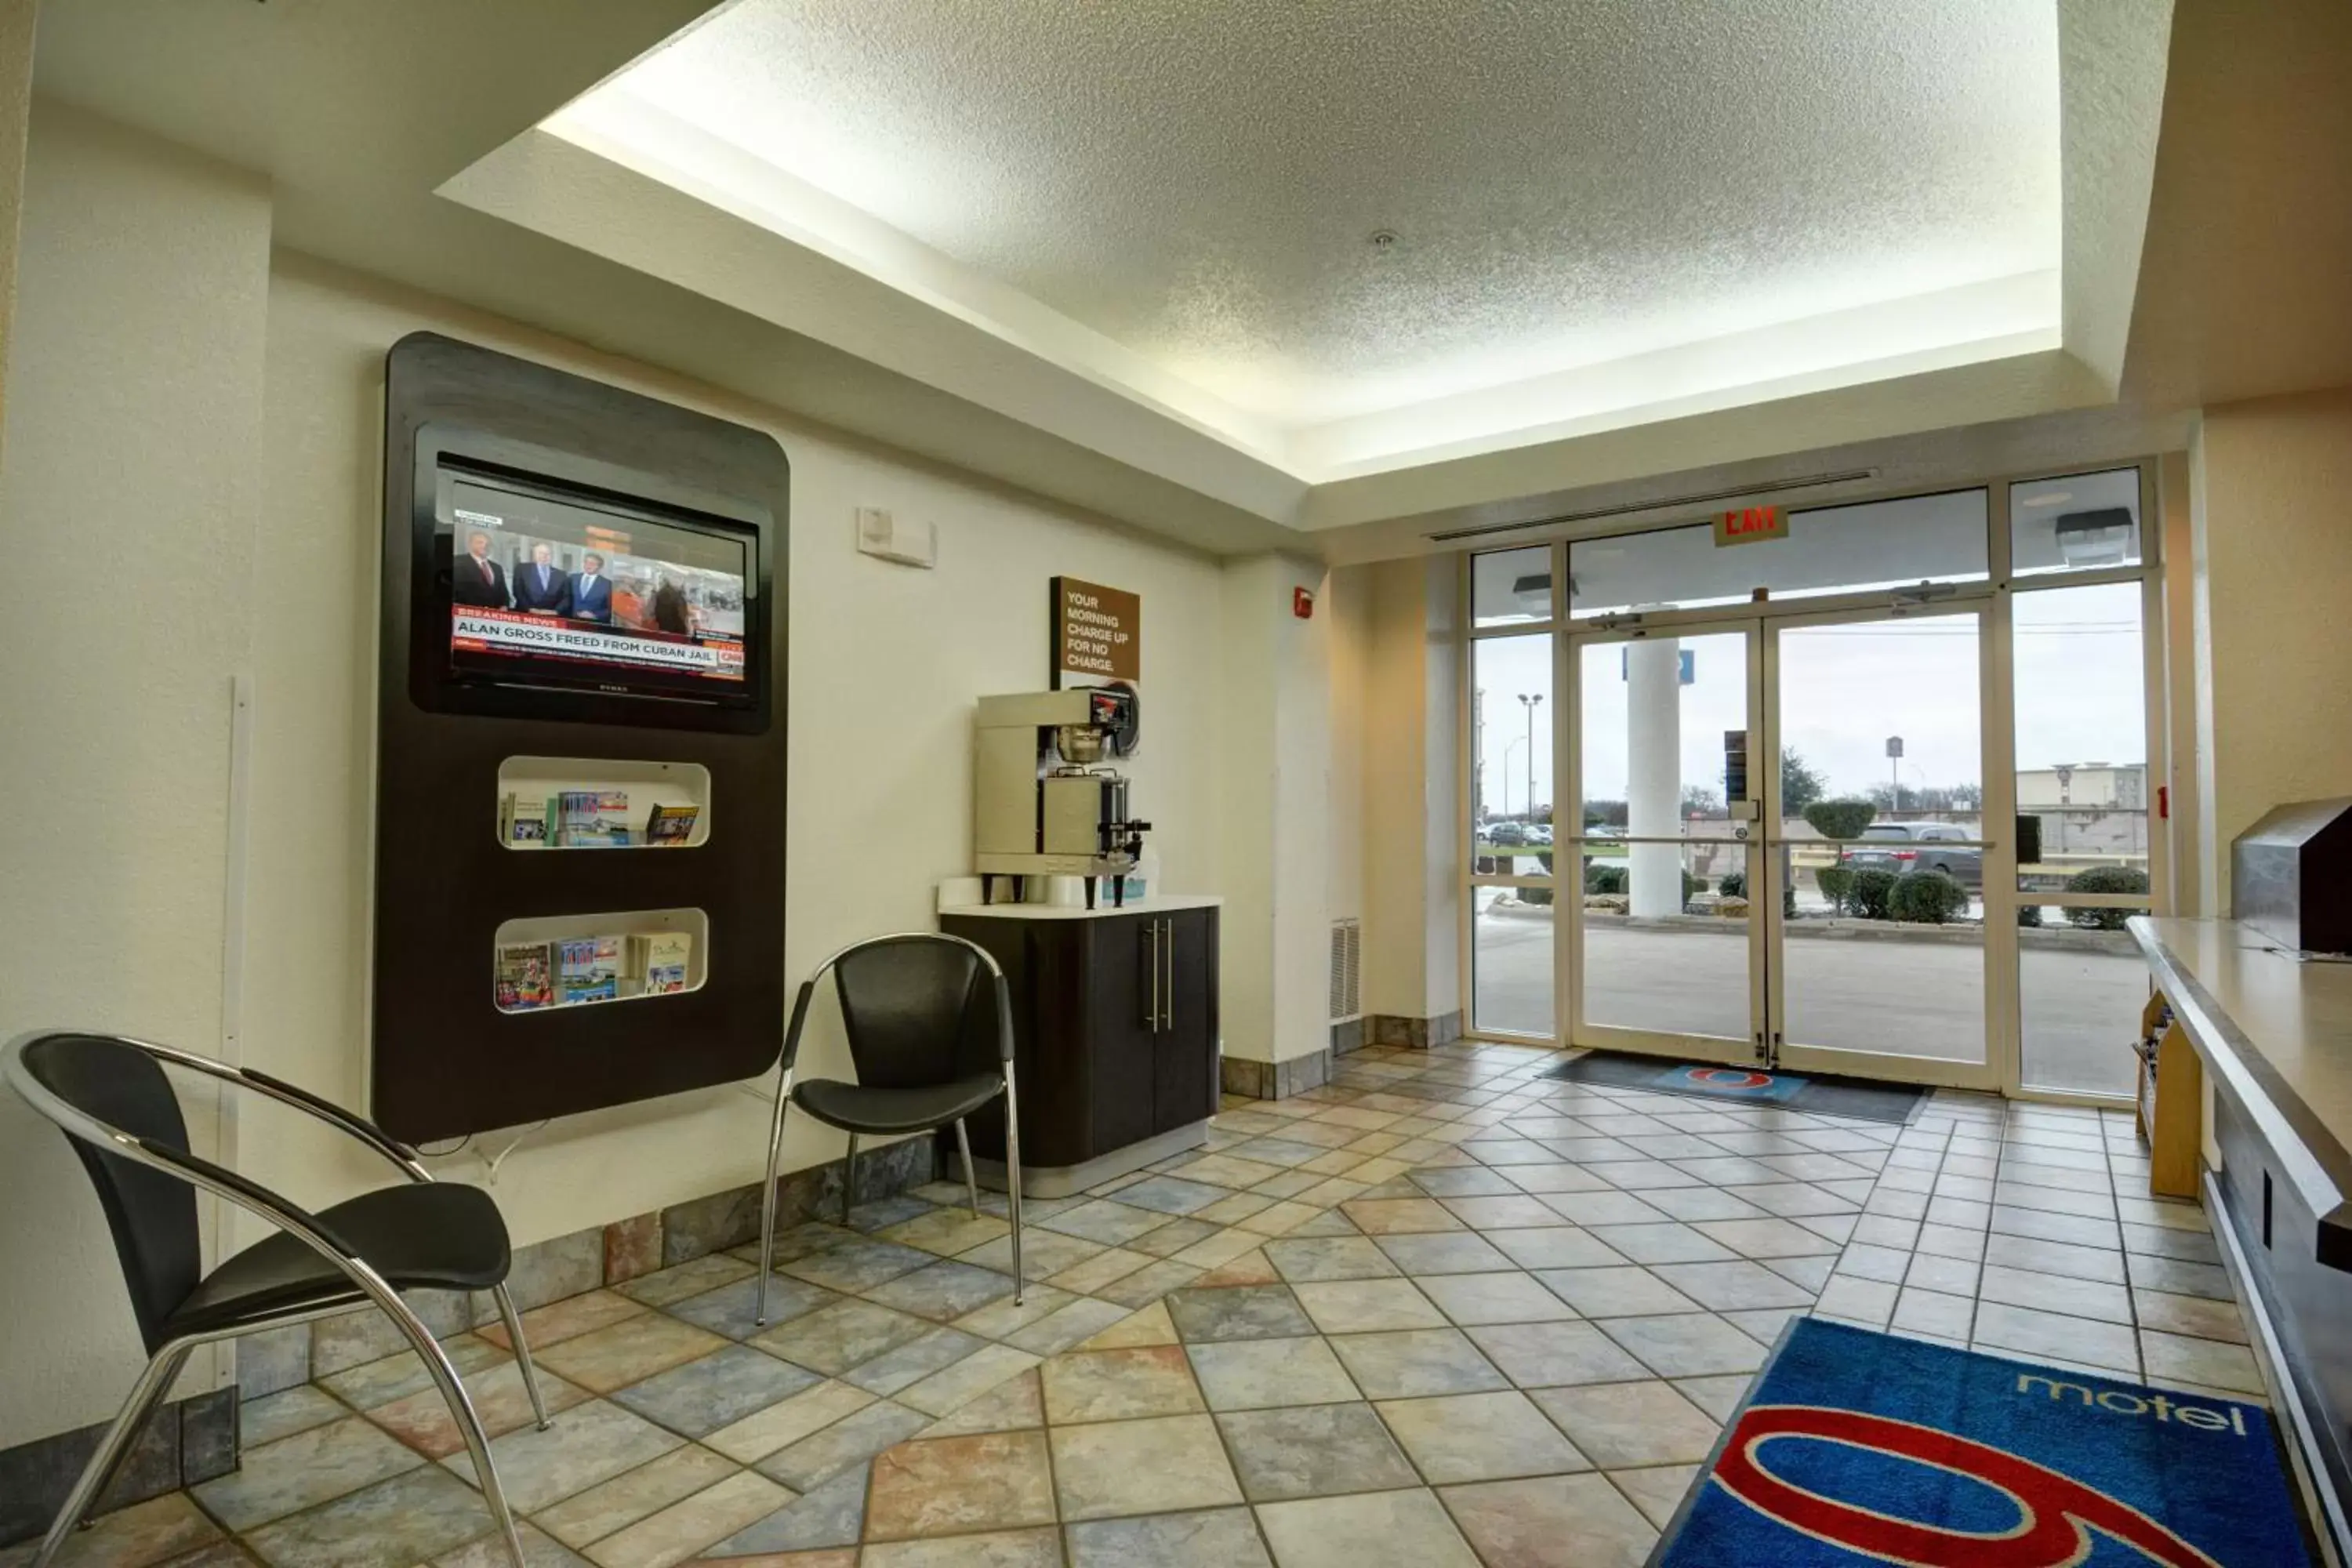 Lobby or reception in Motel 6-Denison, TX